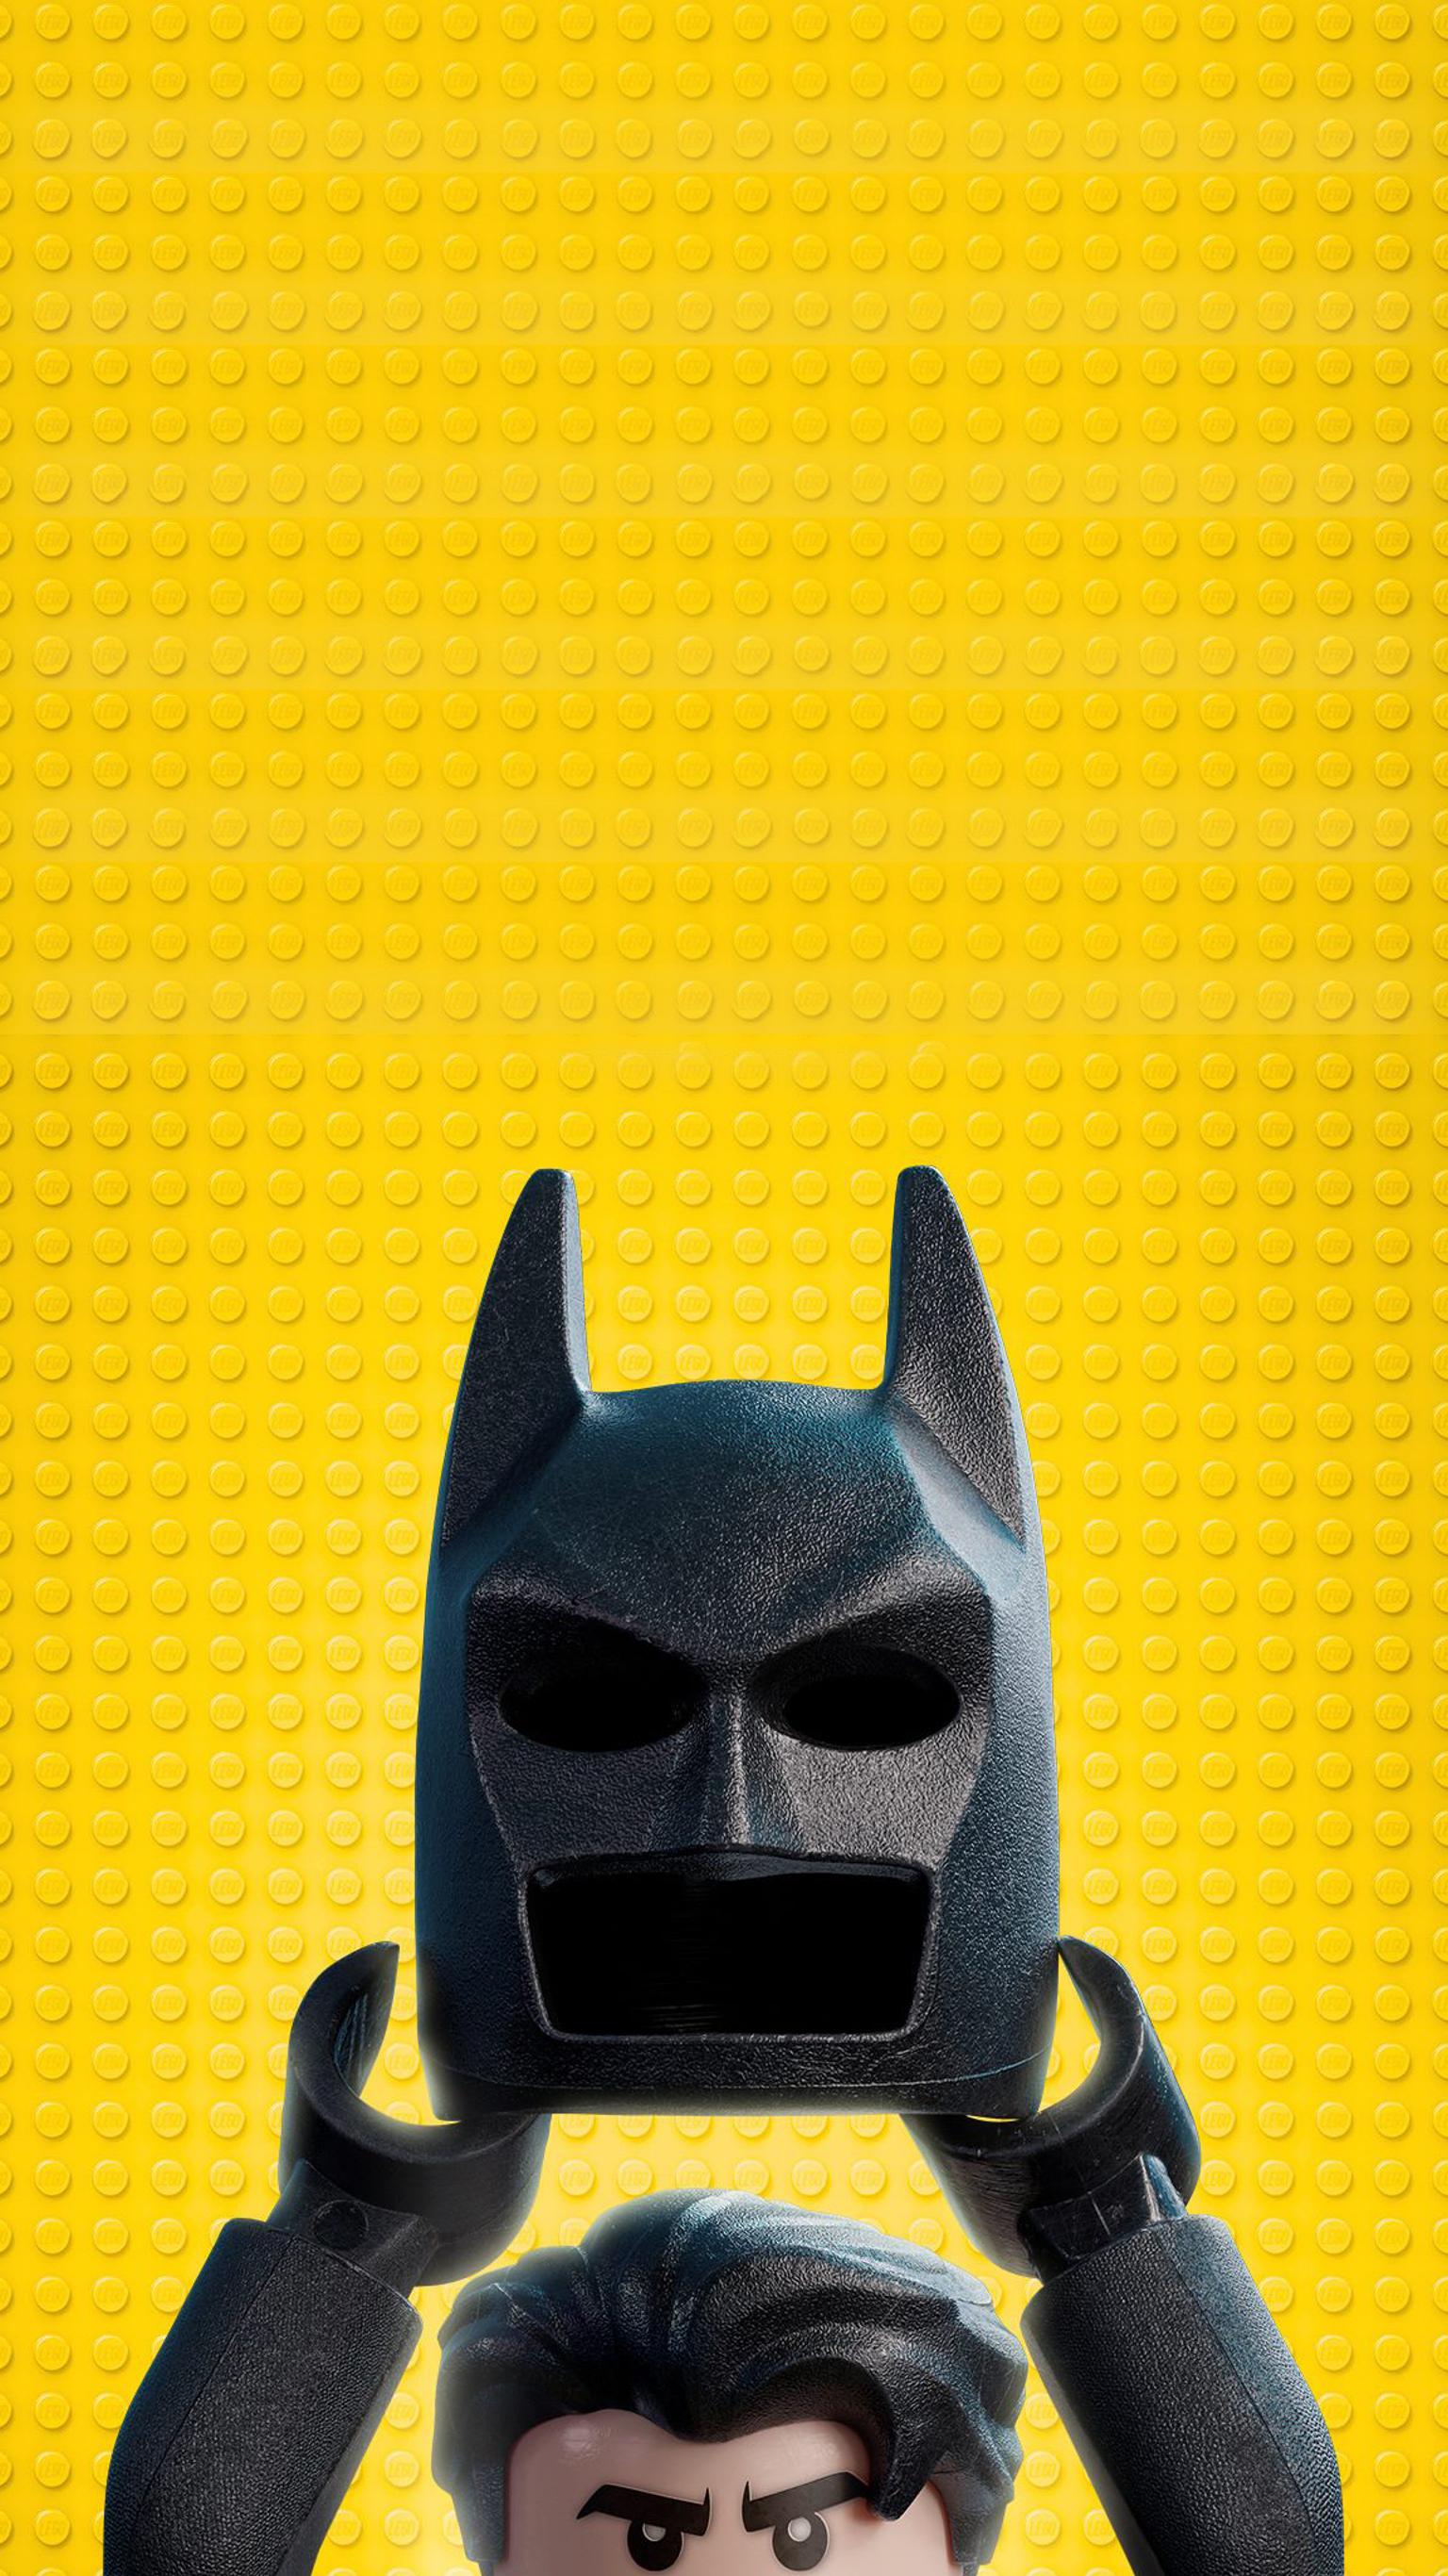 LEGO Batman Movie Wallpapers on WallpaperDog